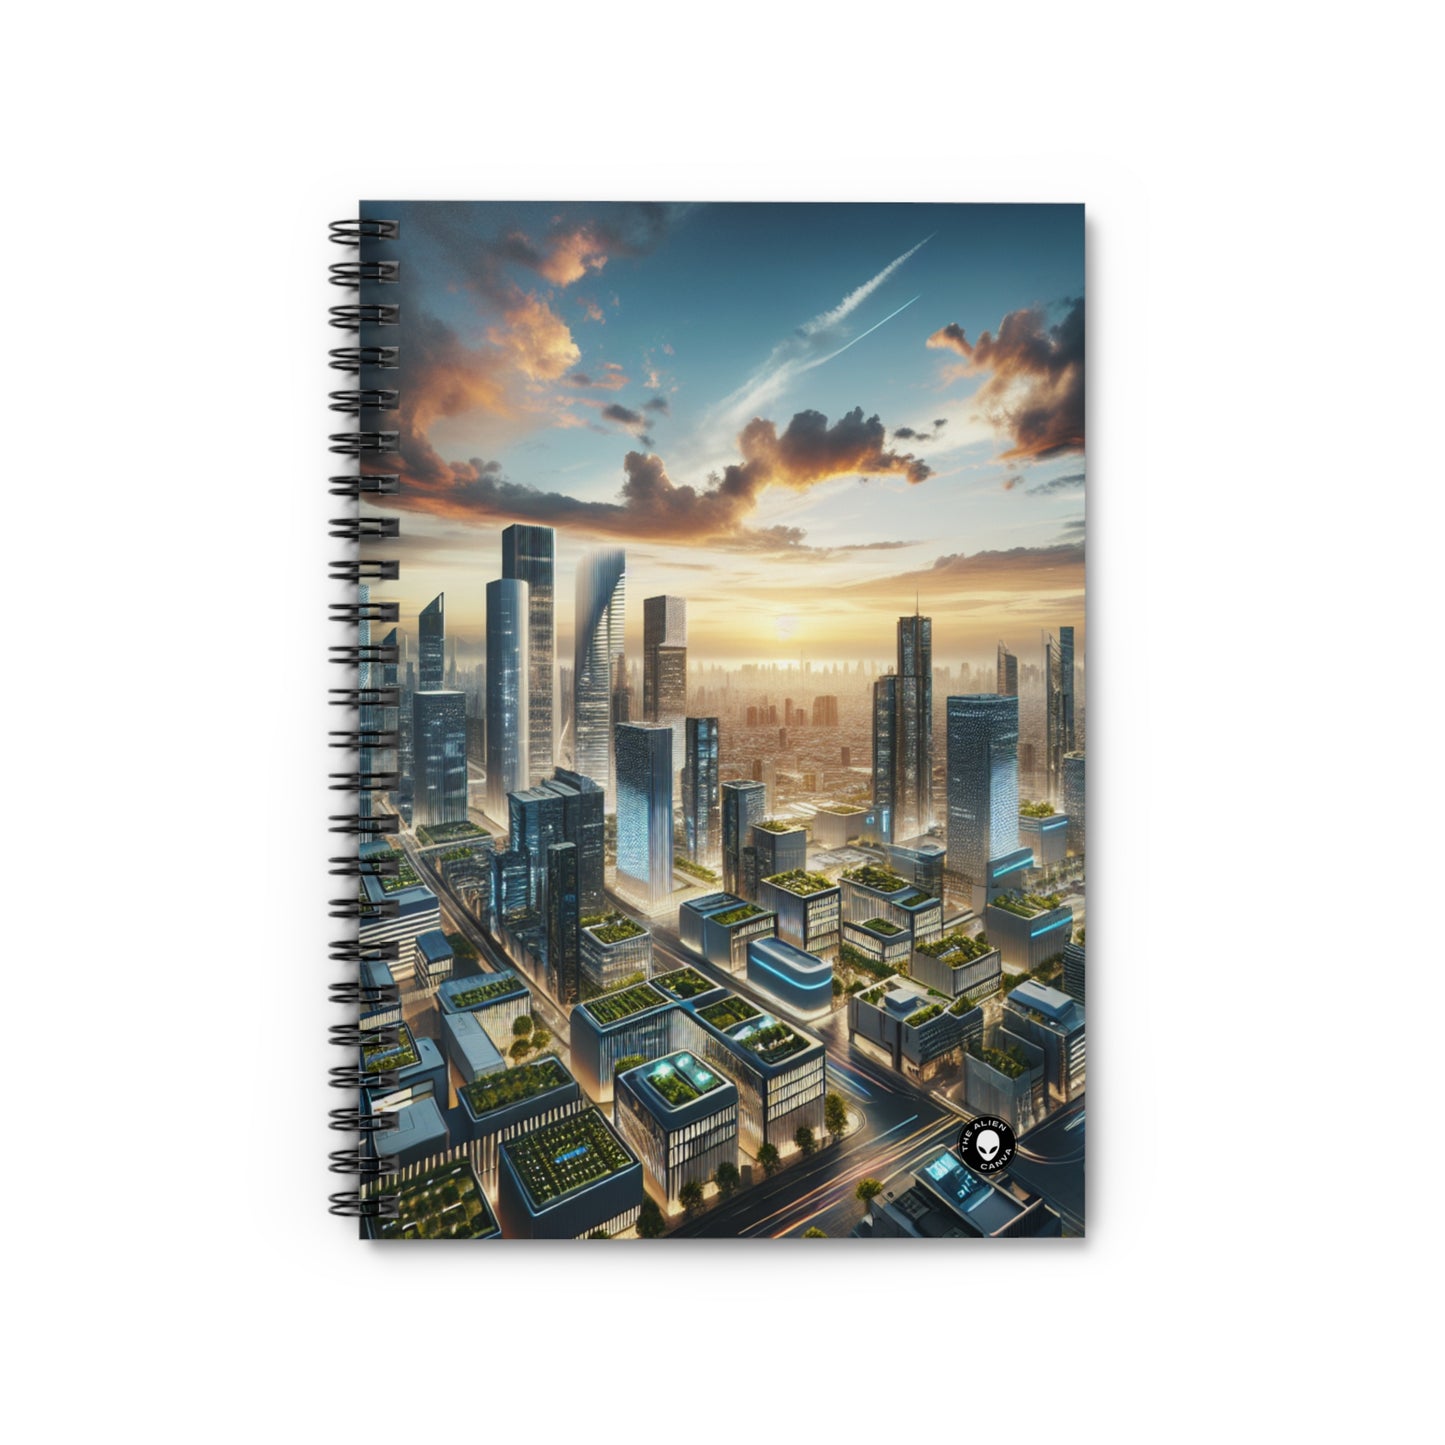 "Future Metropolis: A Neo-Futuristic Urban Utopia" - The Alien Spiral Notebook (Ruled Line) Neo-futurism